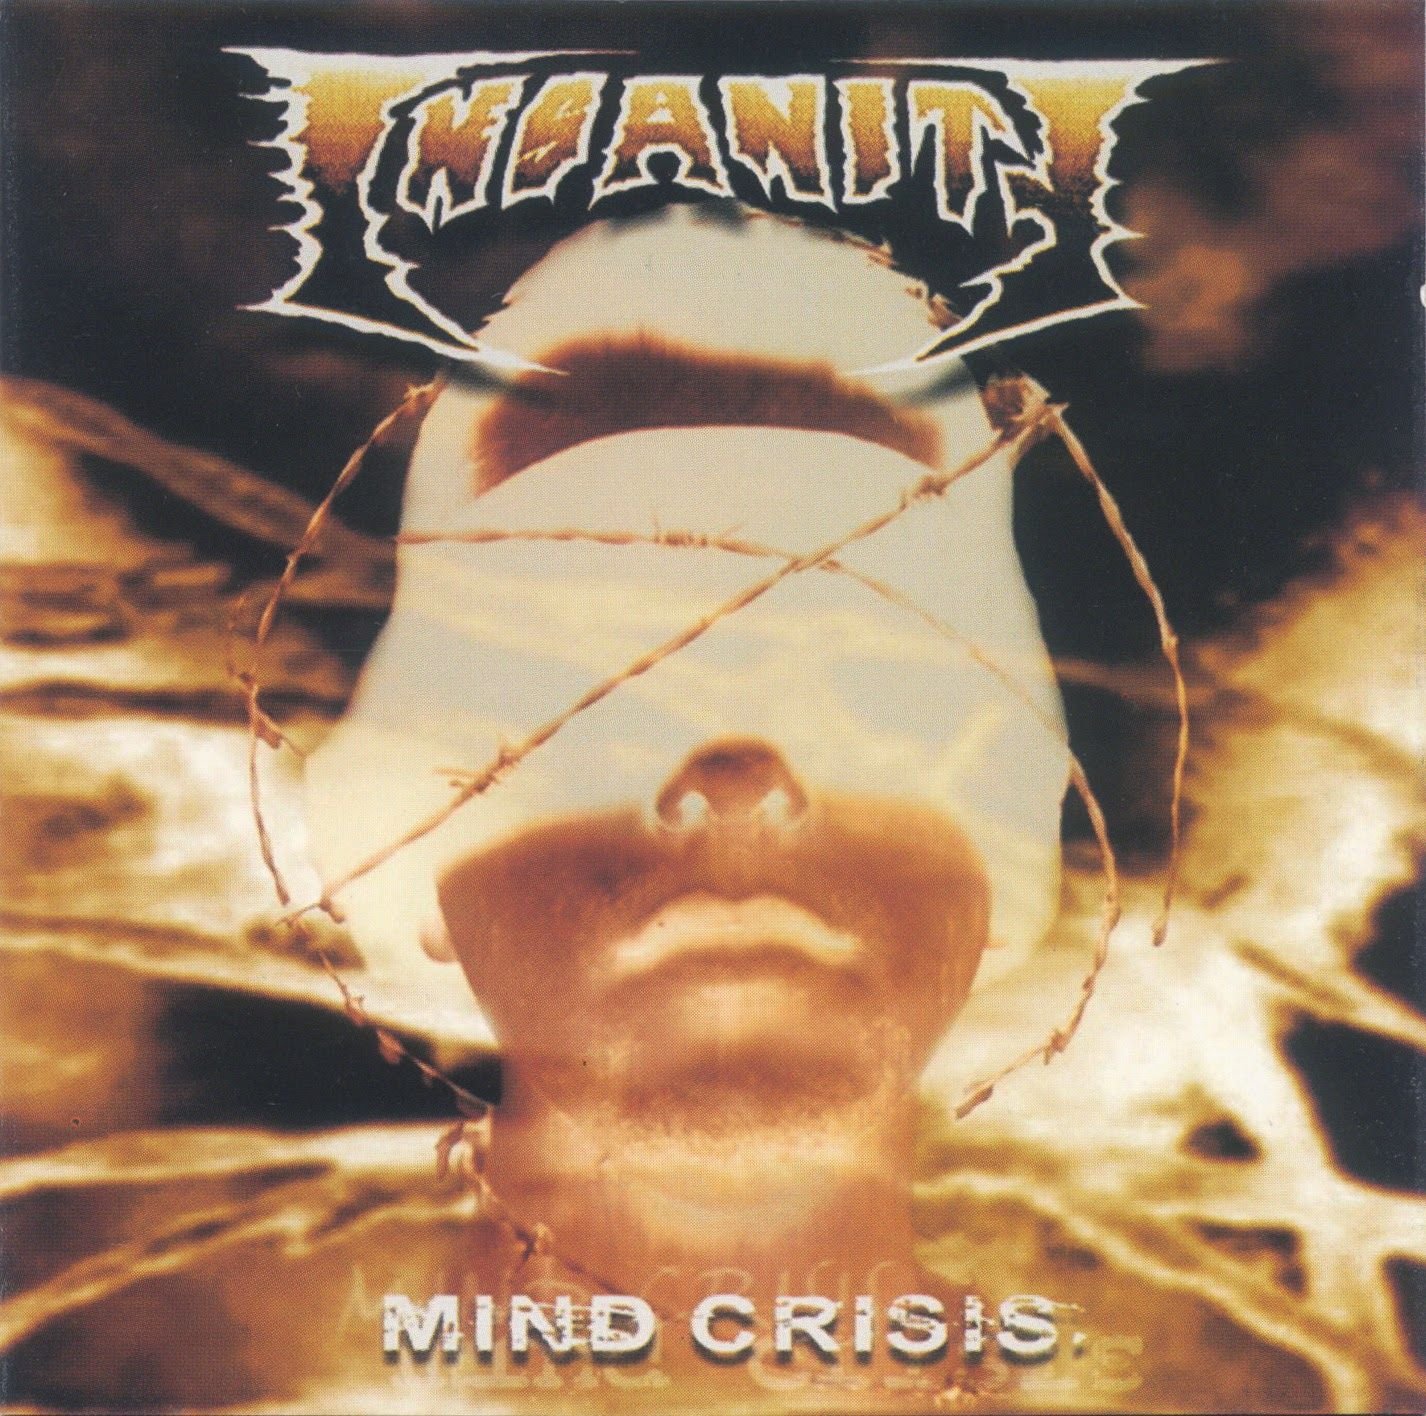 Insanity – Mind Crisis